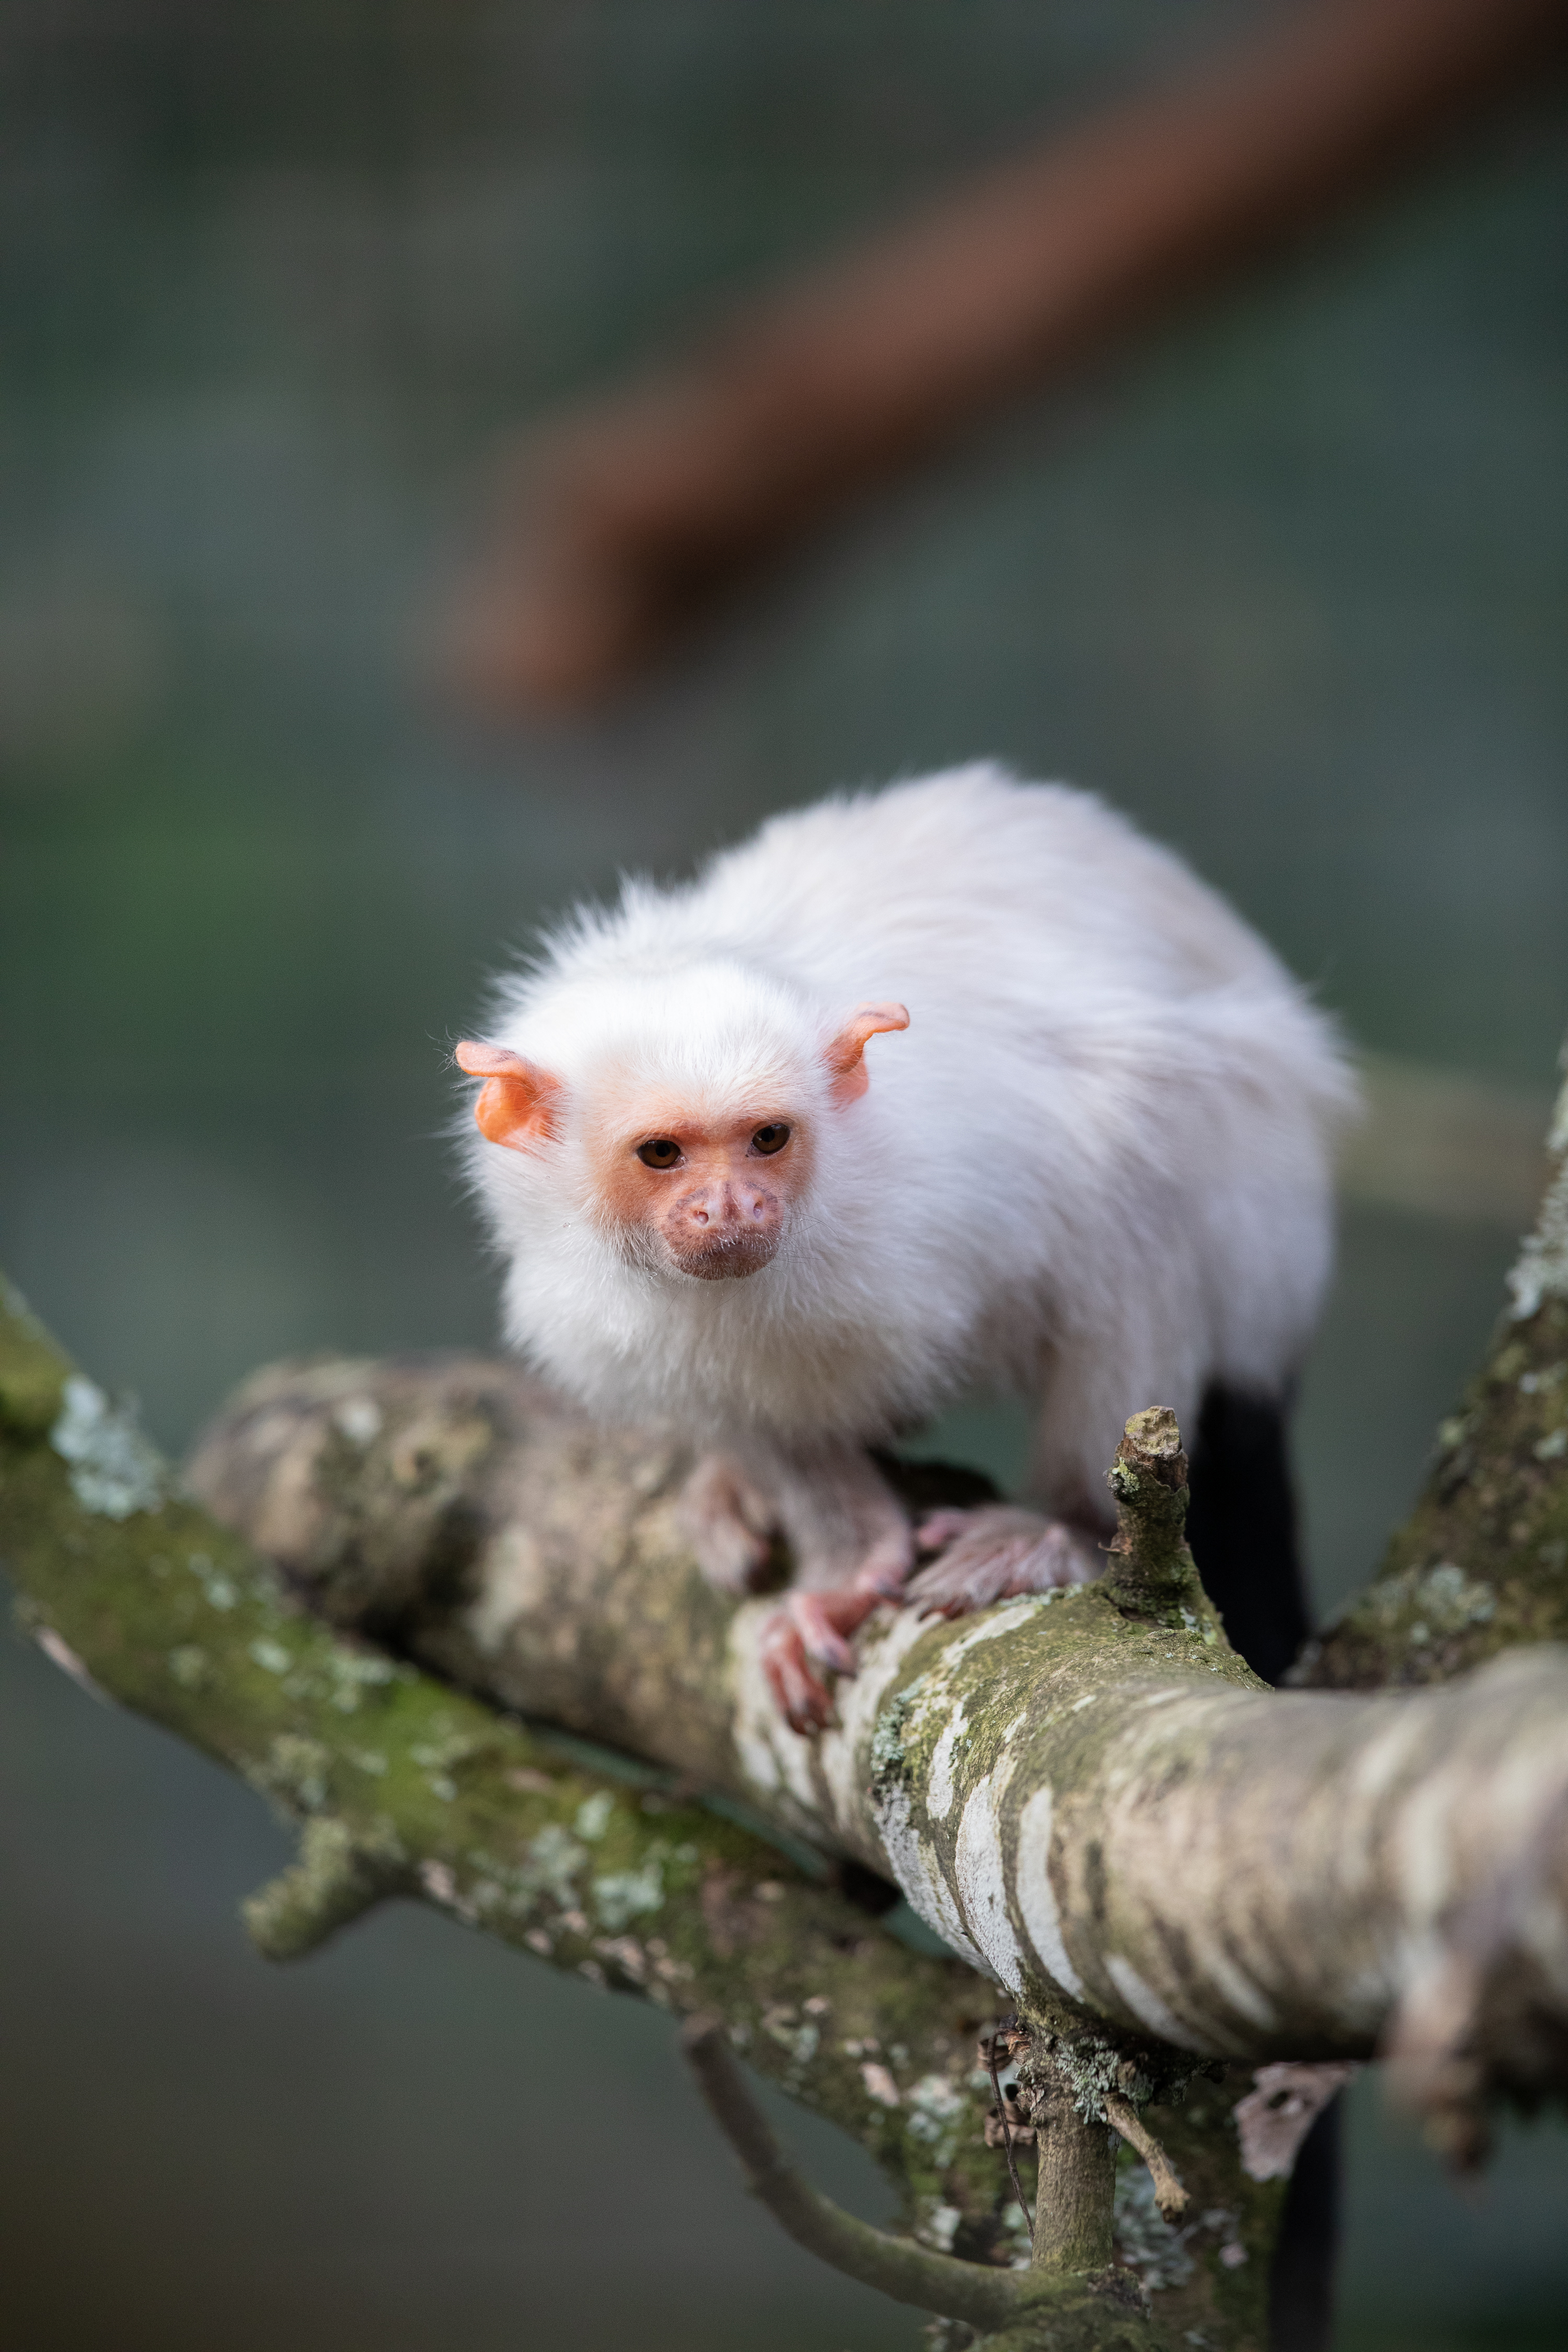 A silvery marmoset monkey on a tree branch